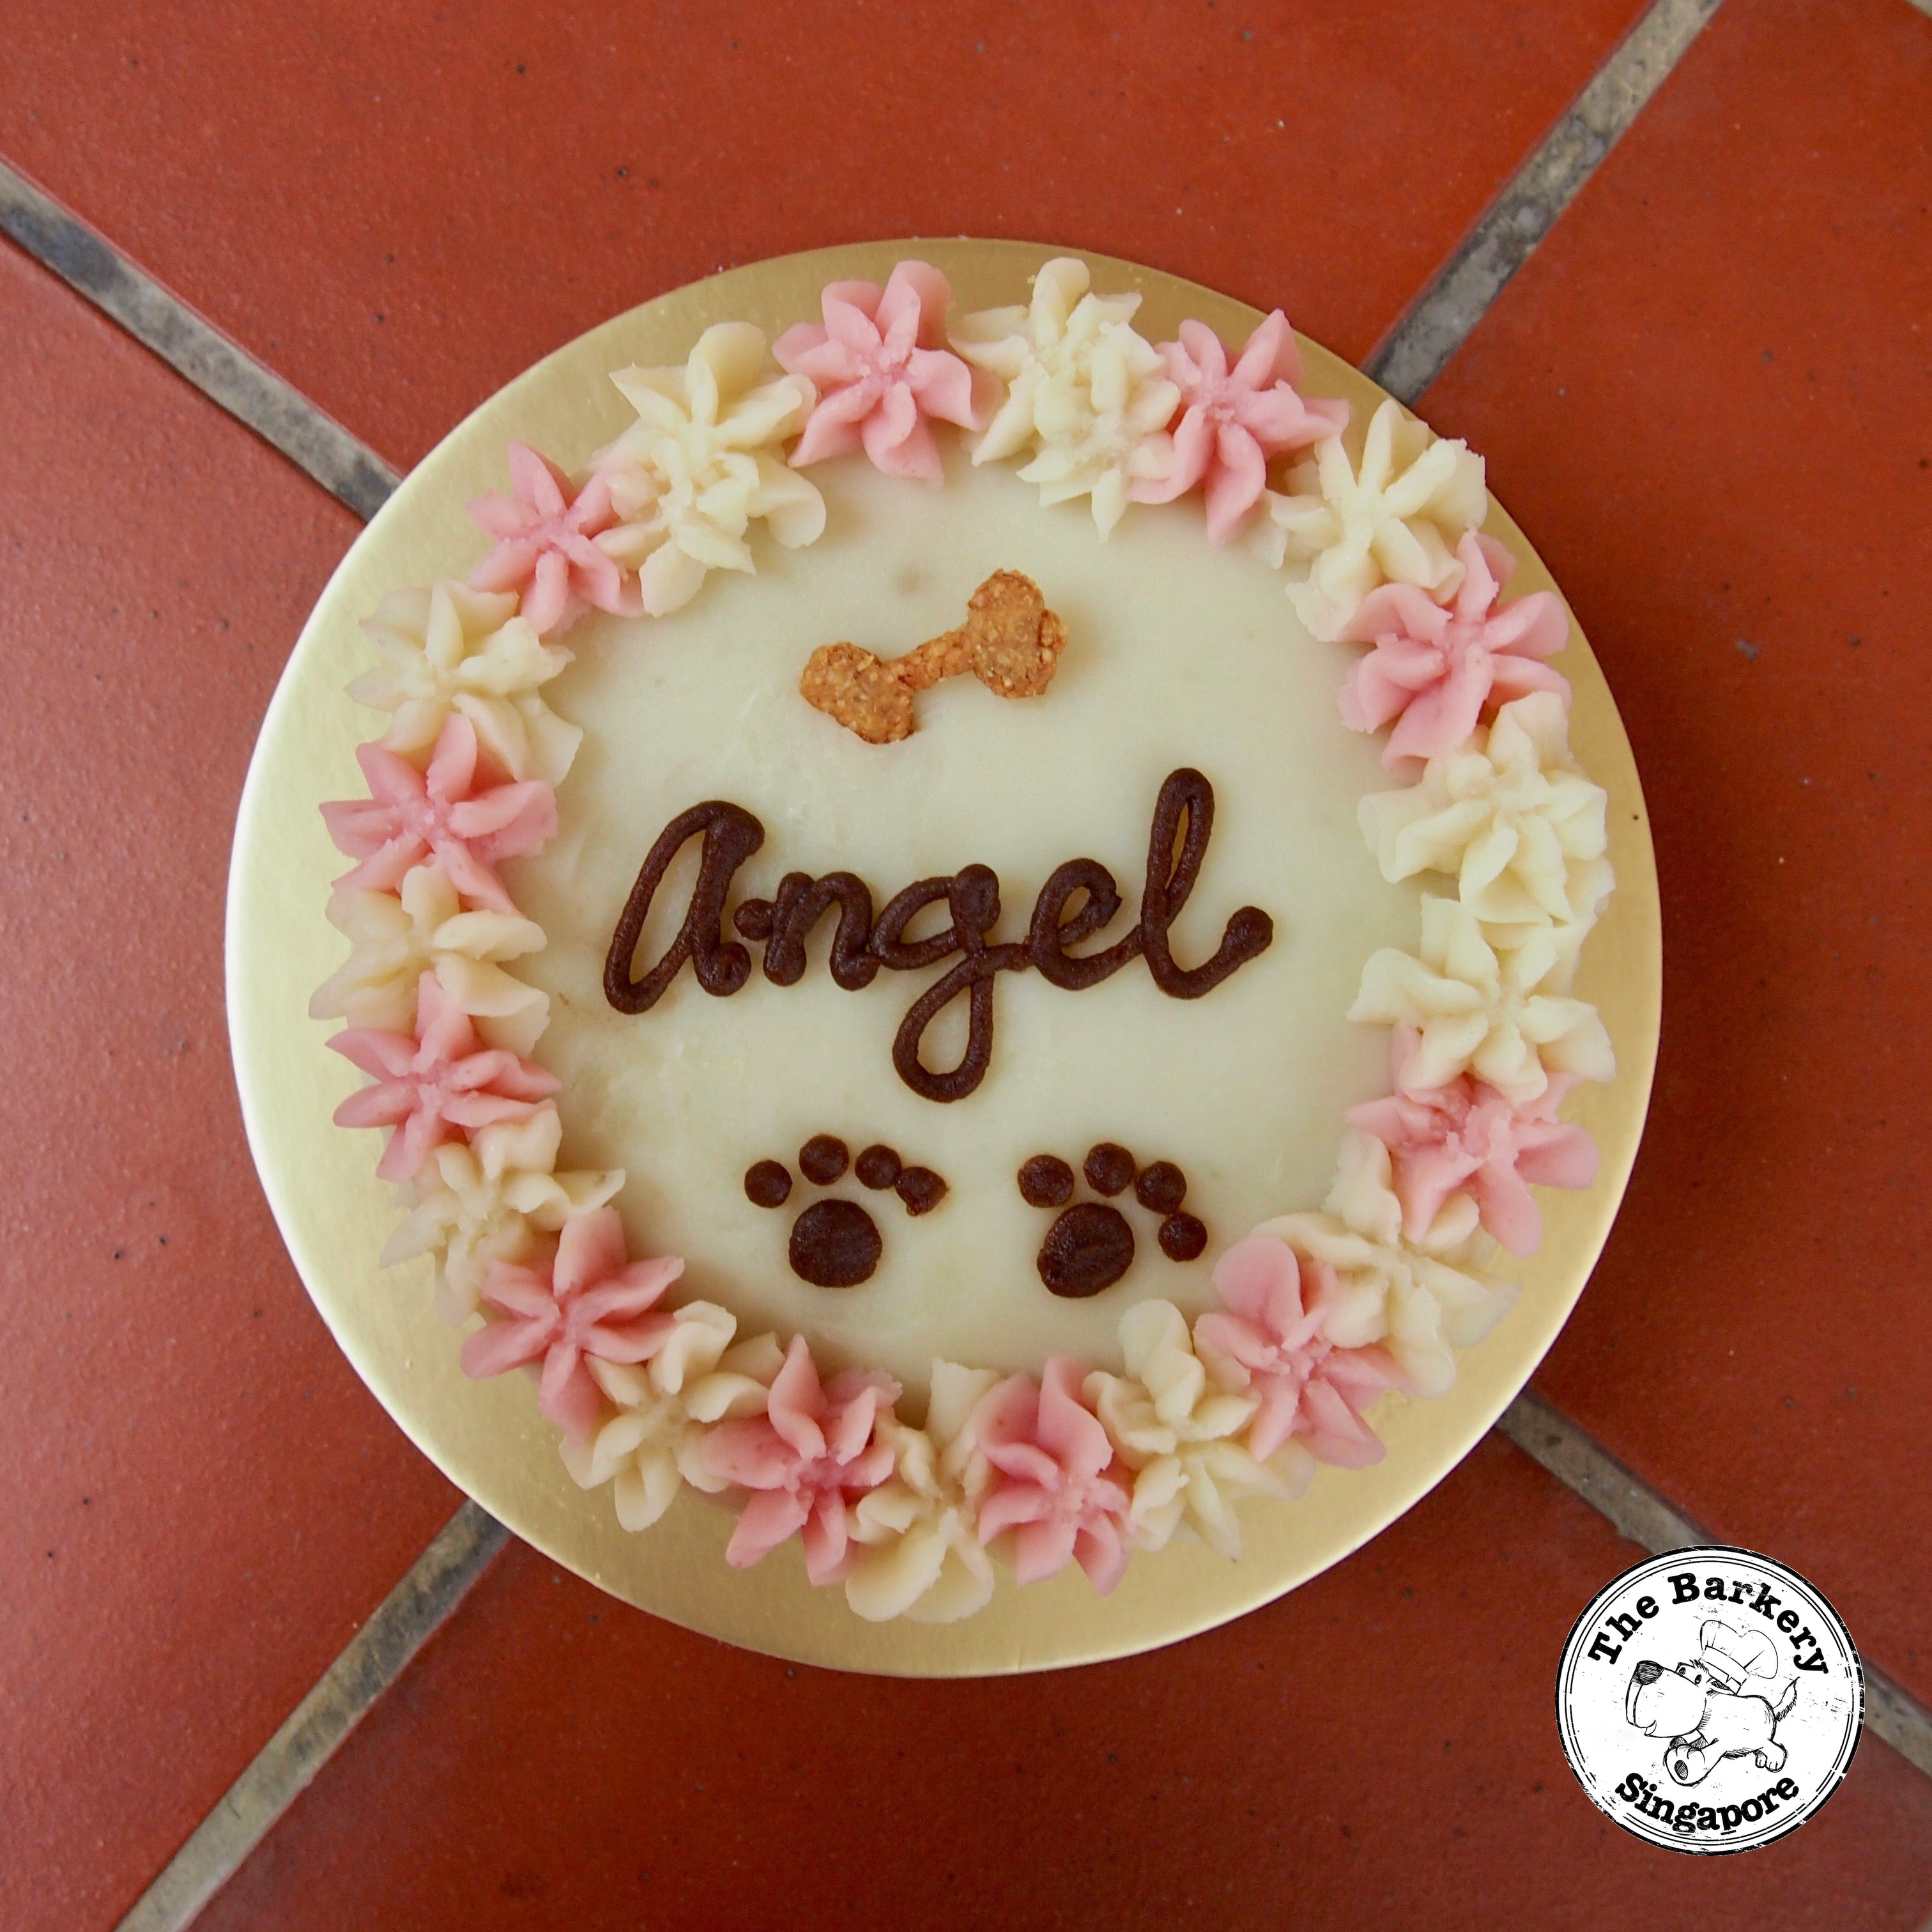 Angel Cake Bakery